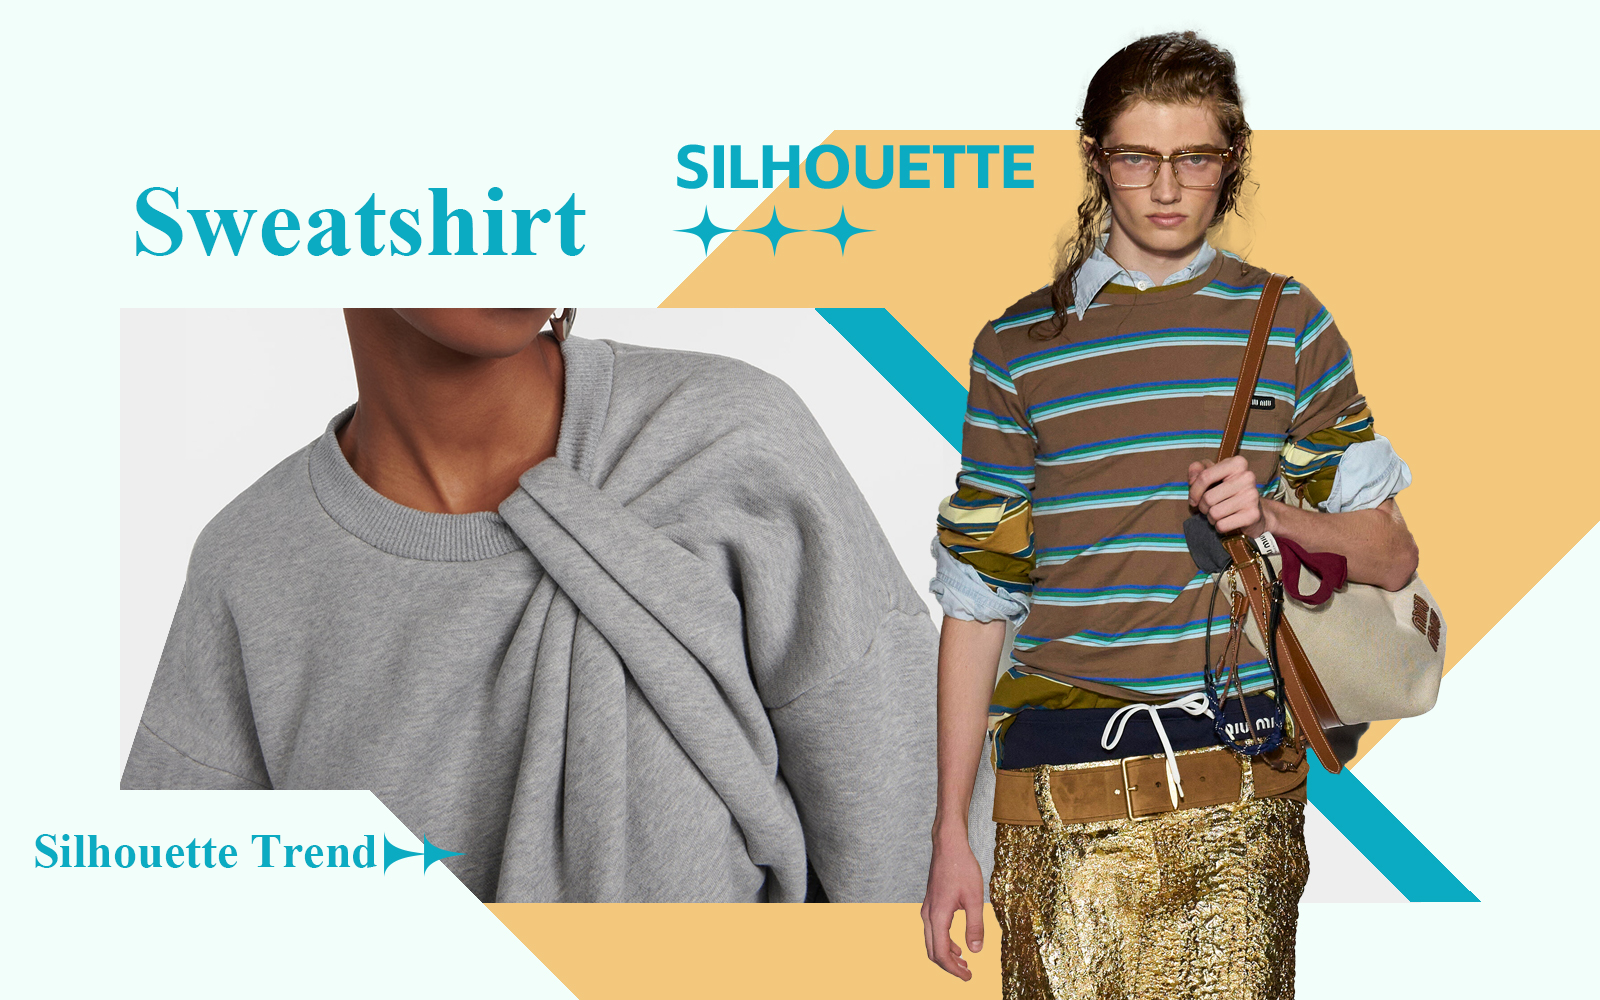 The Silhouette Trend for Women's Sweatshirt